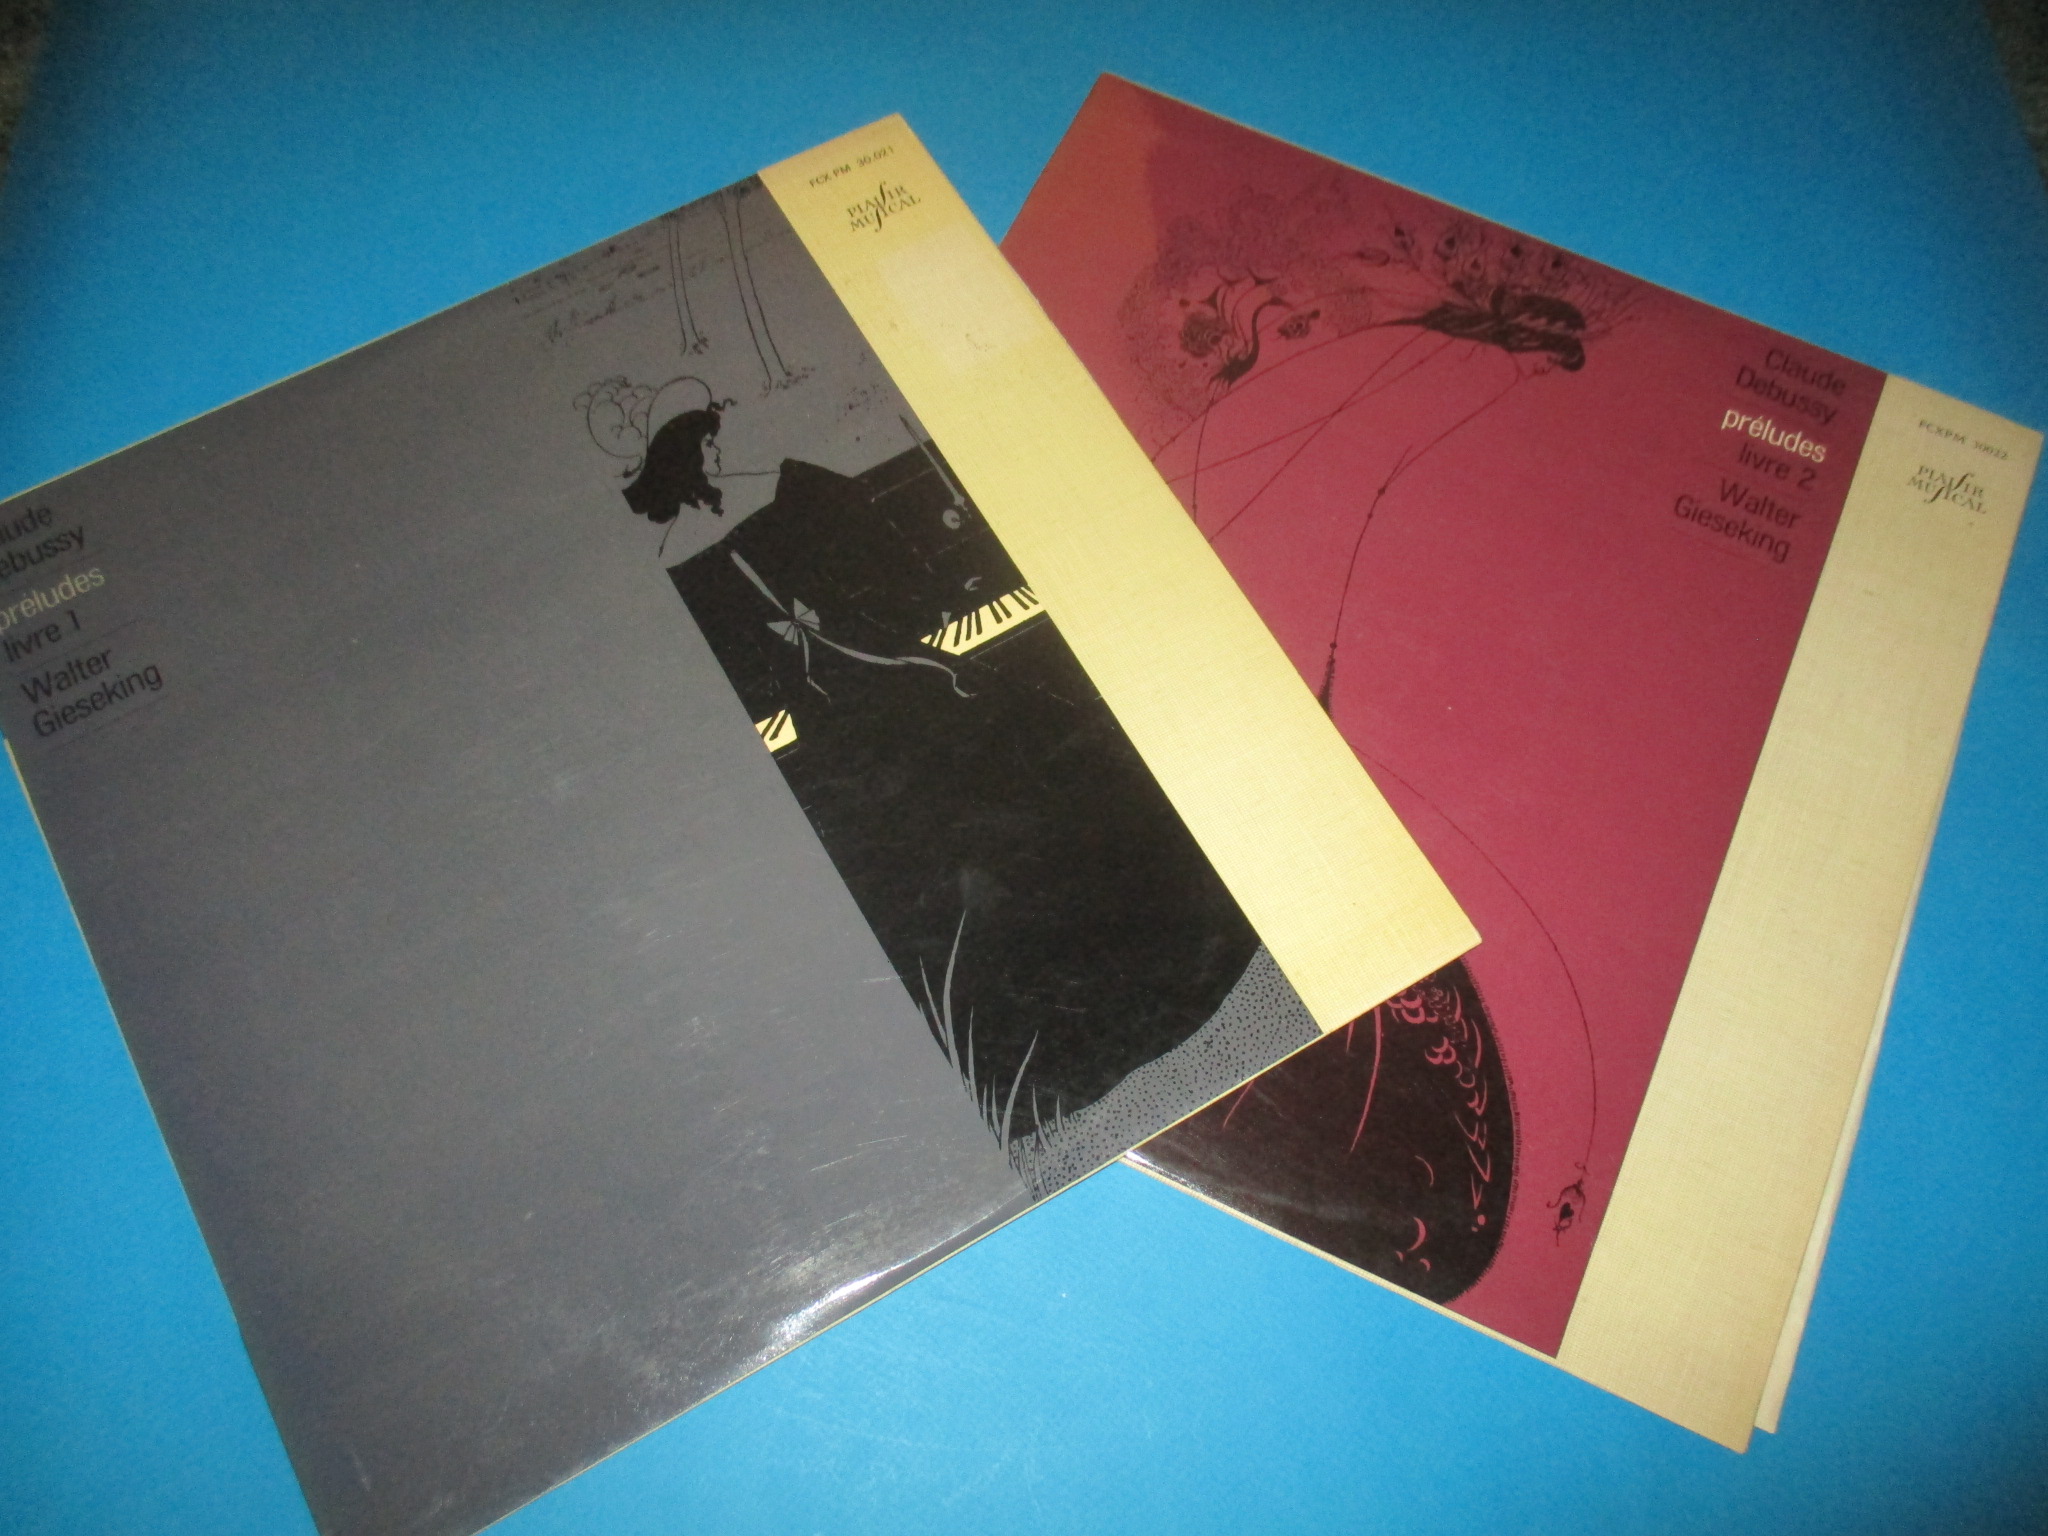 2 disques Préludes de Debussy, livres 1 & 2, Walter Gieseking, 2 x 33 tours Plaisir Musical Columbia